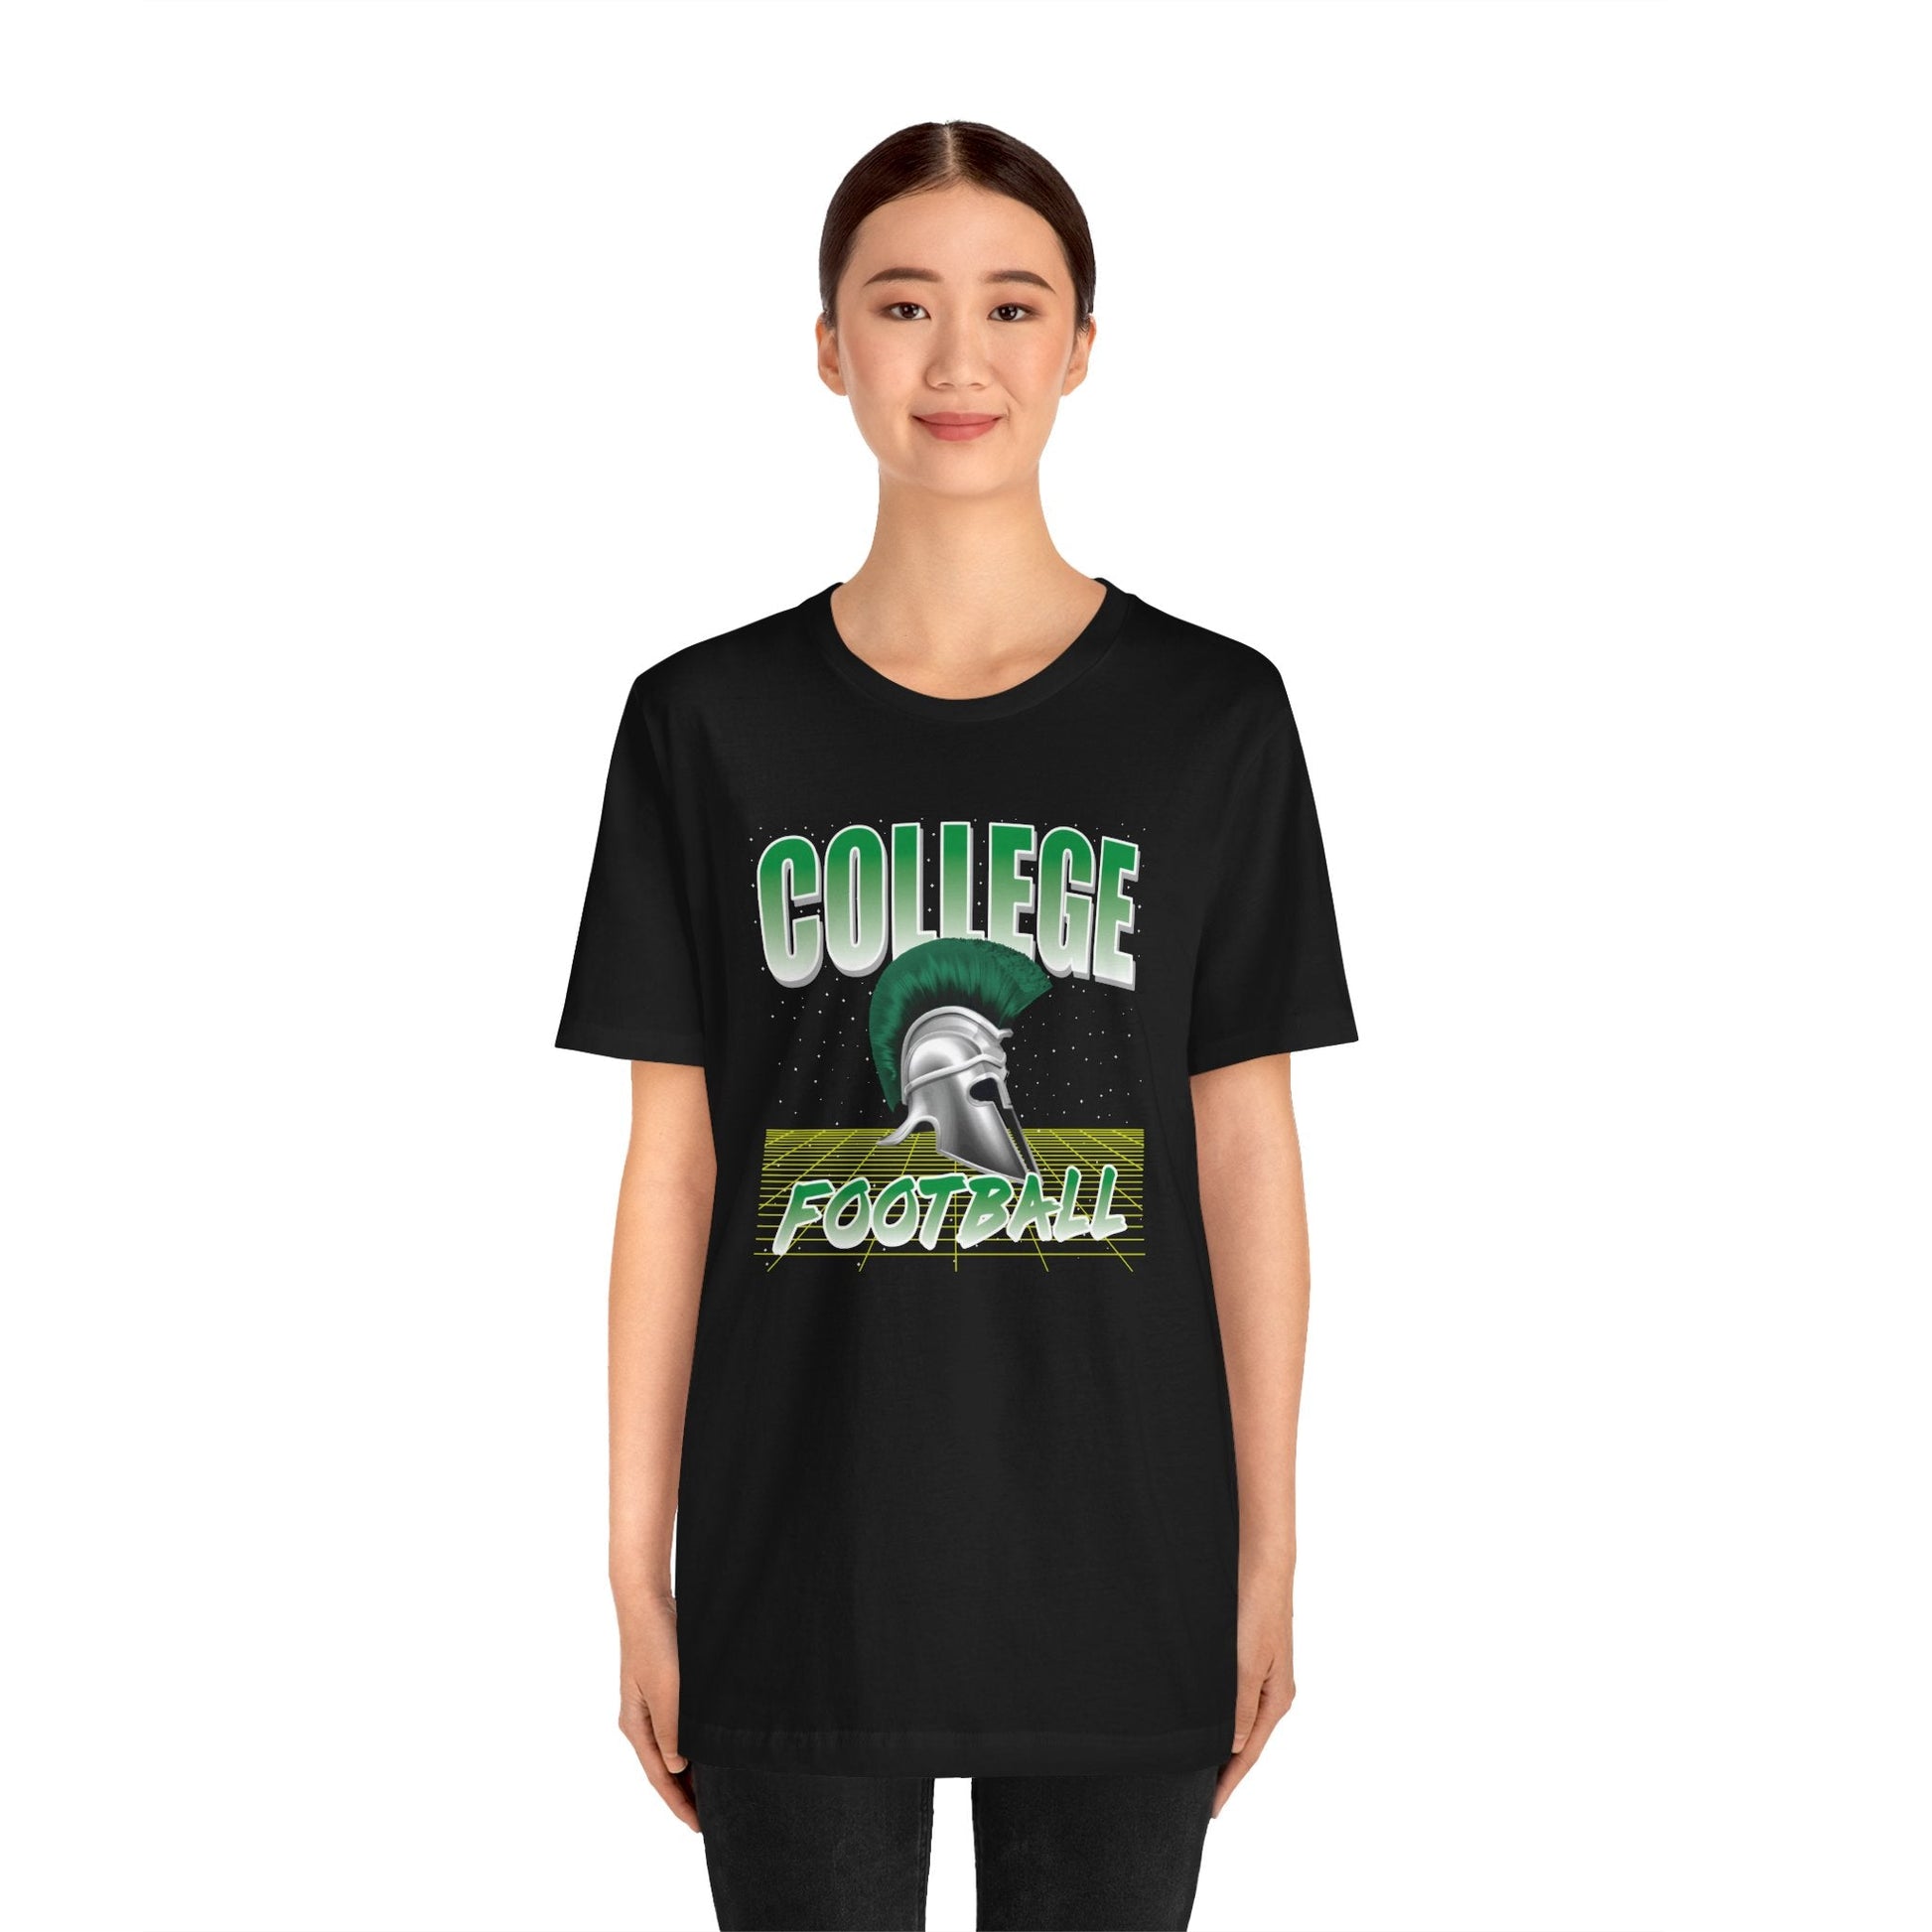 Michigan State 82 Football Soft Jersey T-Shirt | Downriver Clothing Apparel | Detroit Michigan | Downriver World